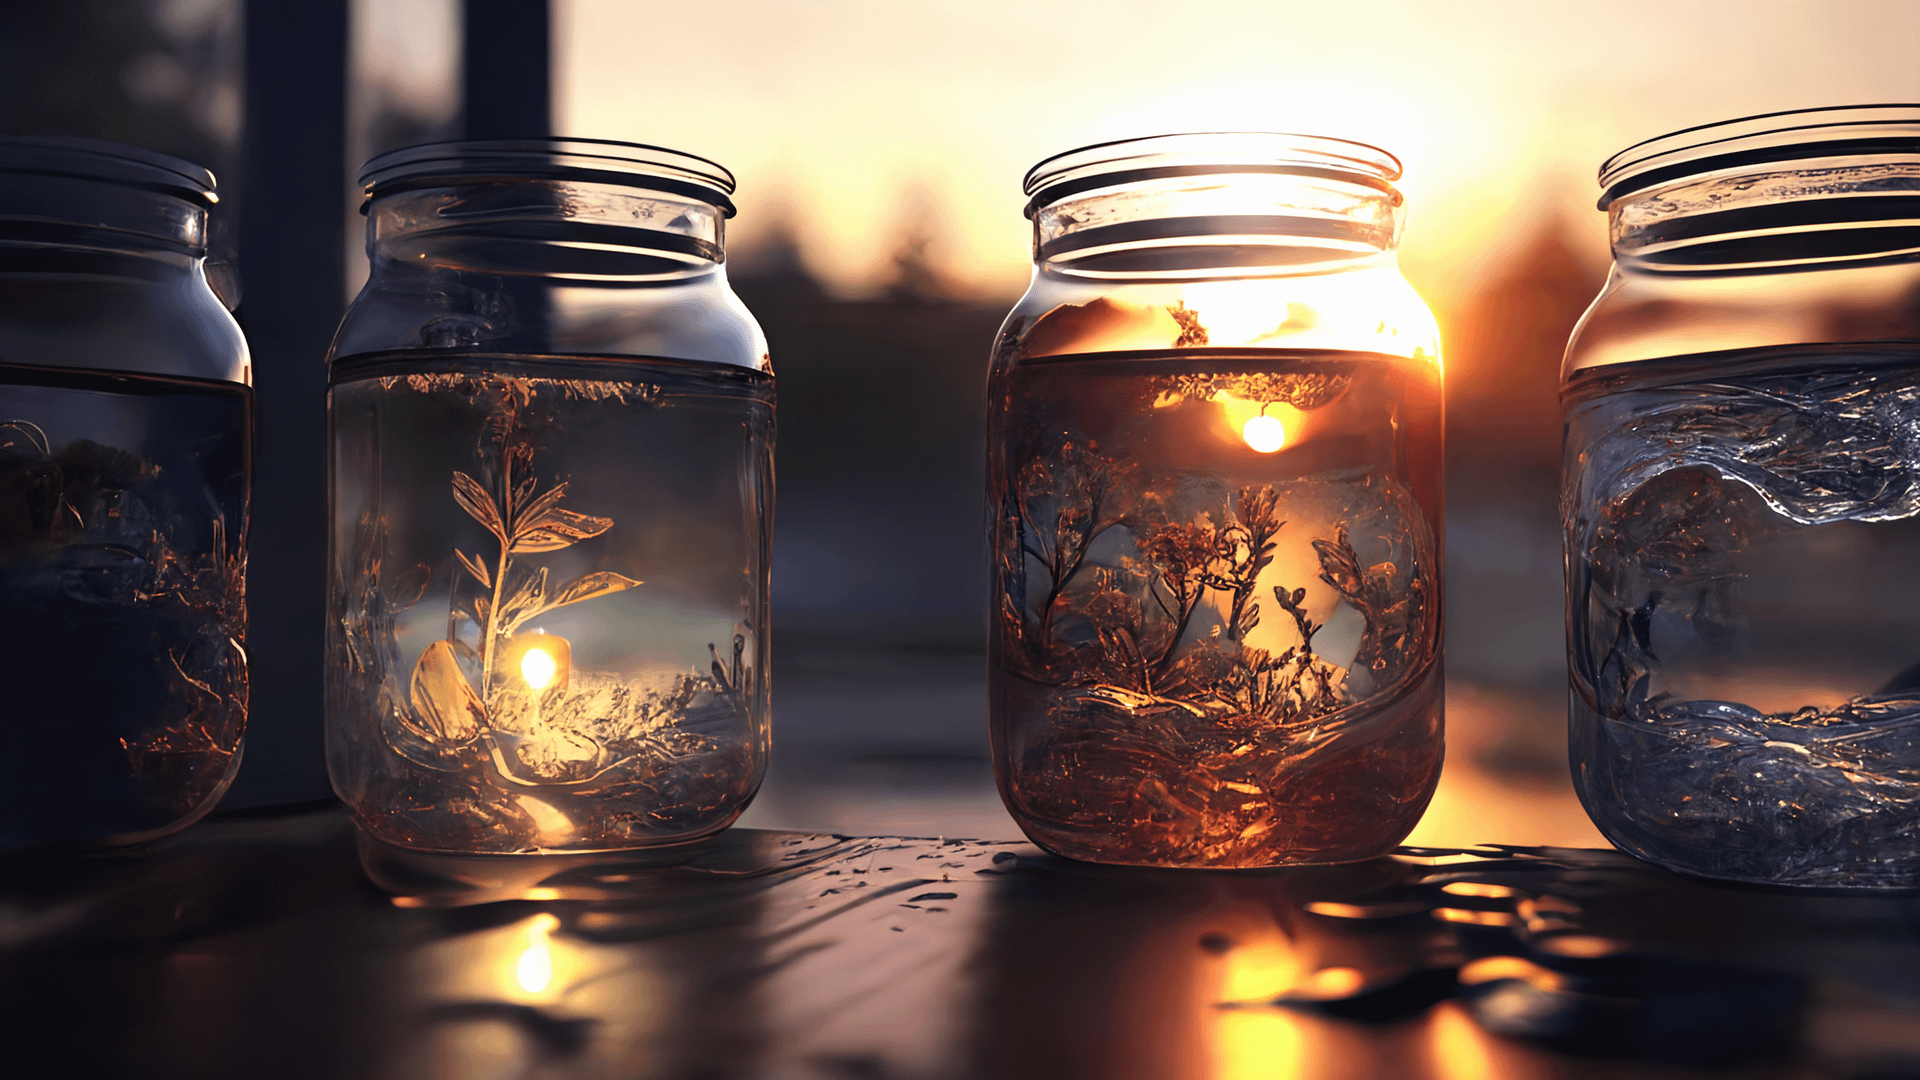 4 zodiac elements in jars